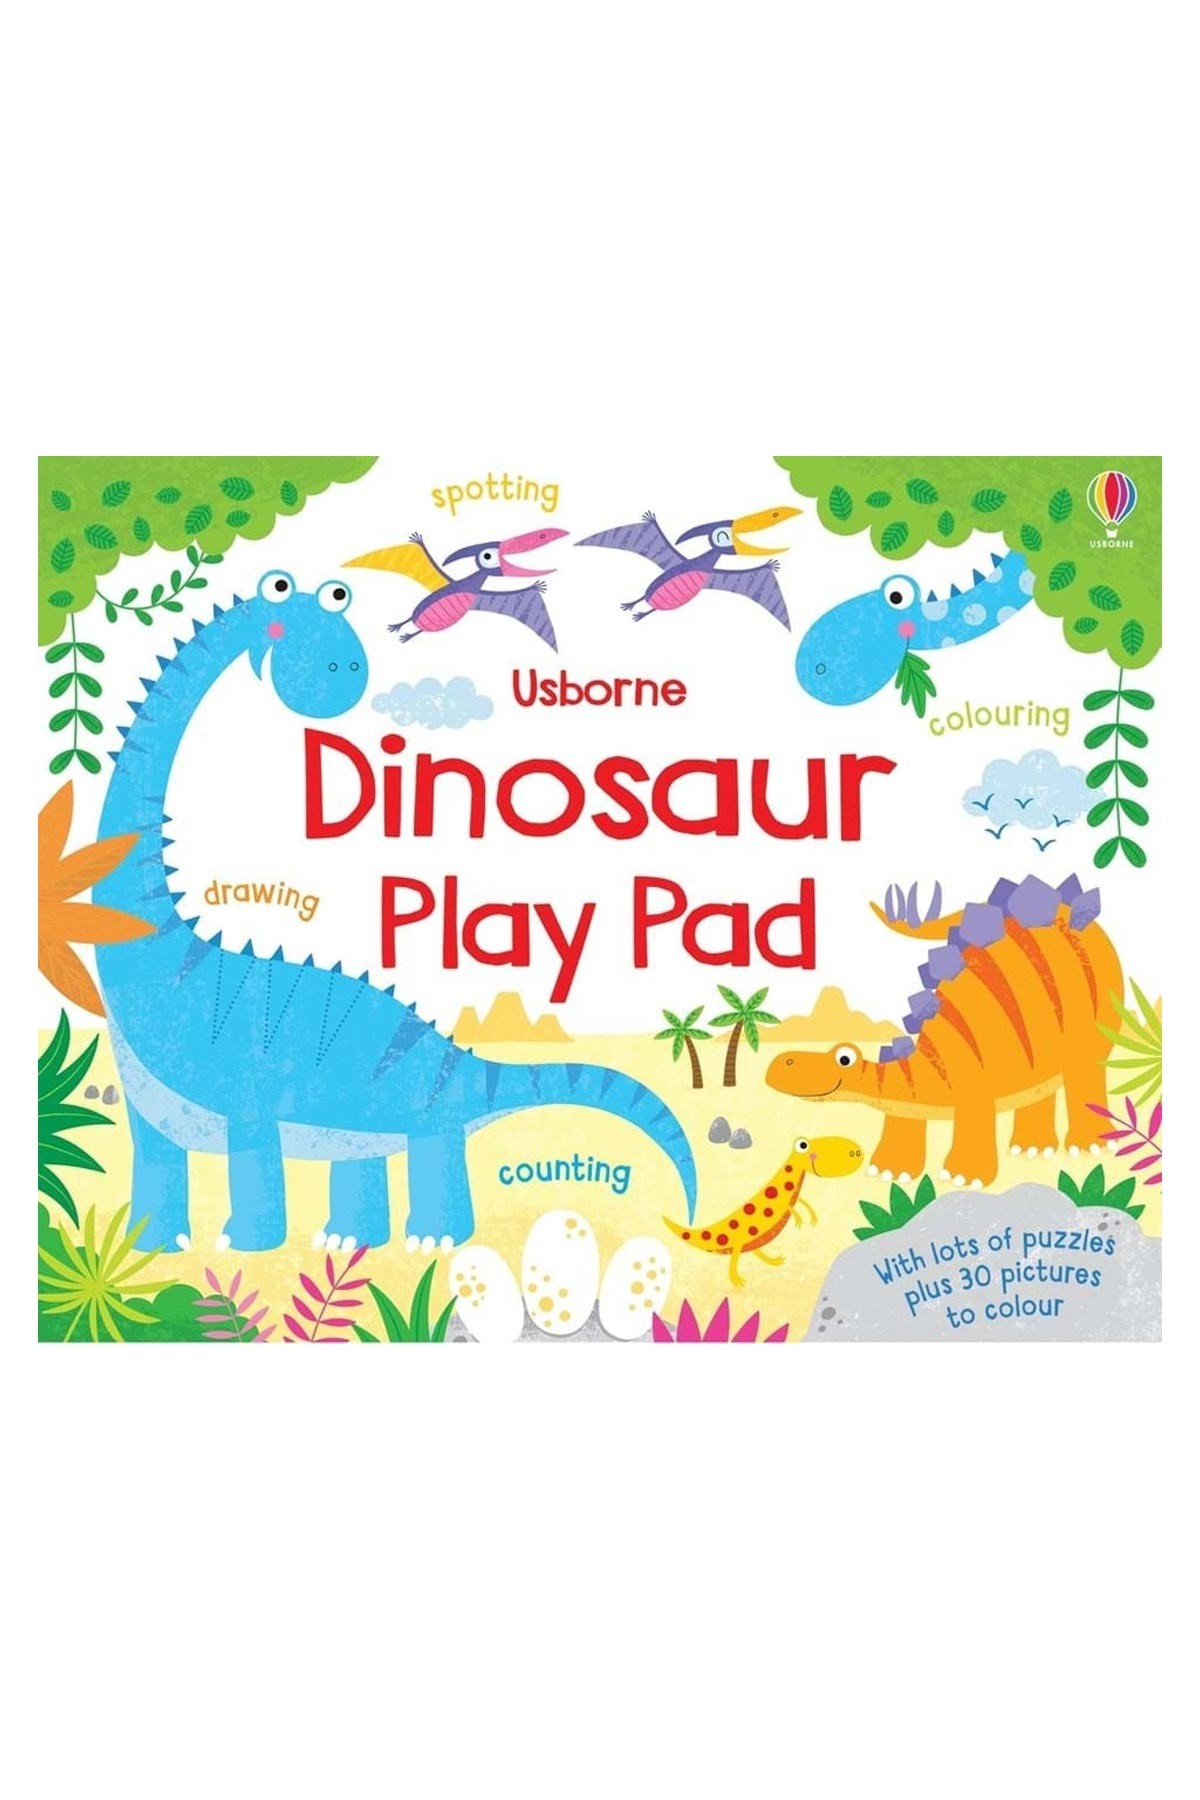 The Usborne Dinosaur Play Pad